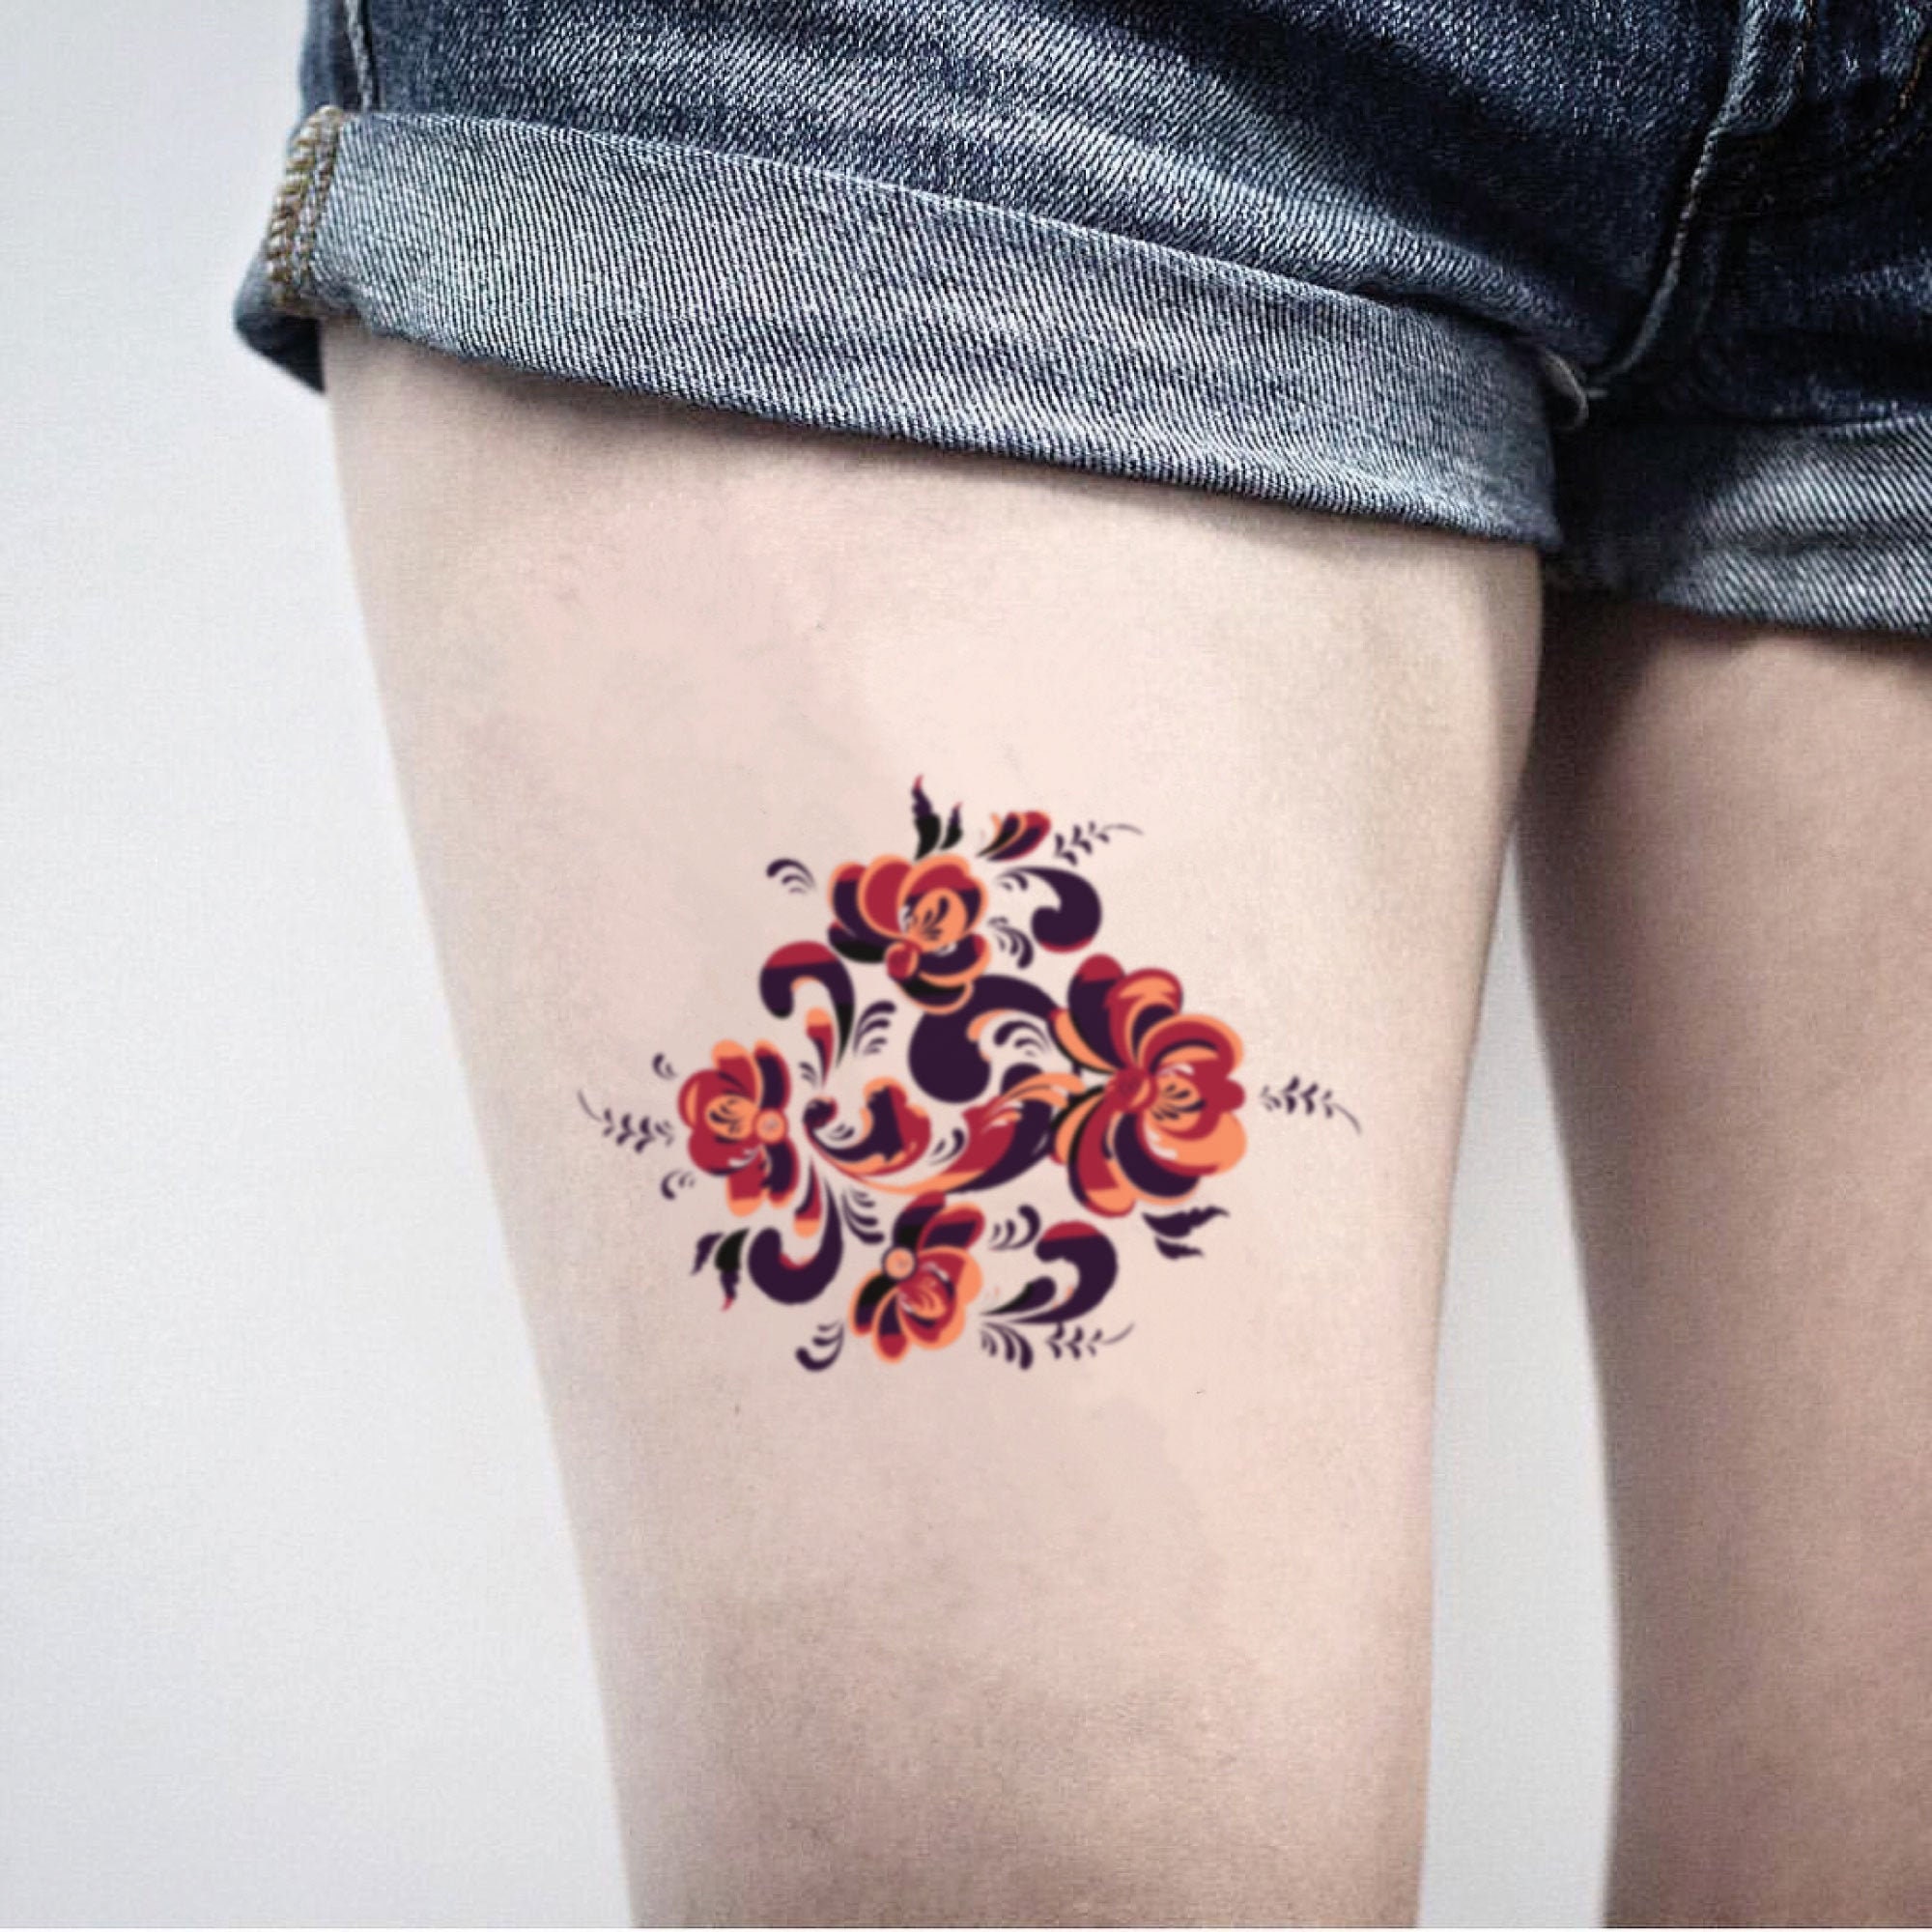 rosemaling tattoo  lea smith  Flickr